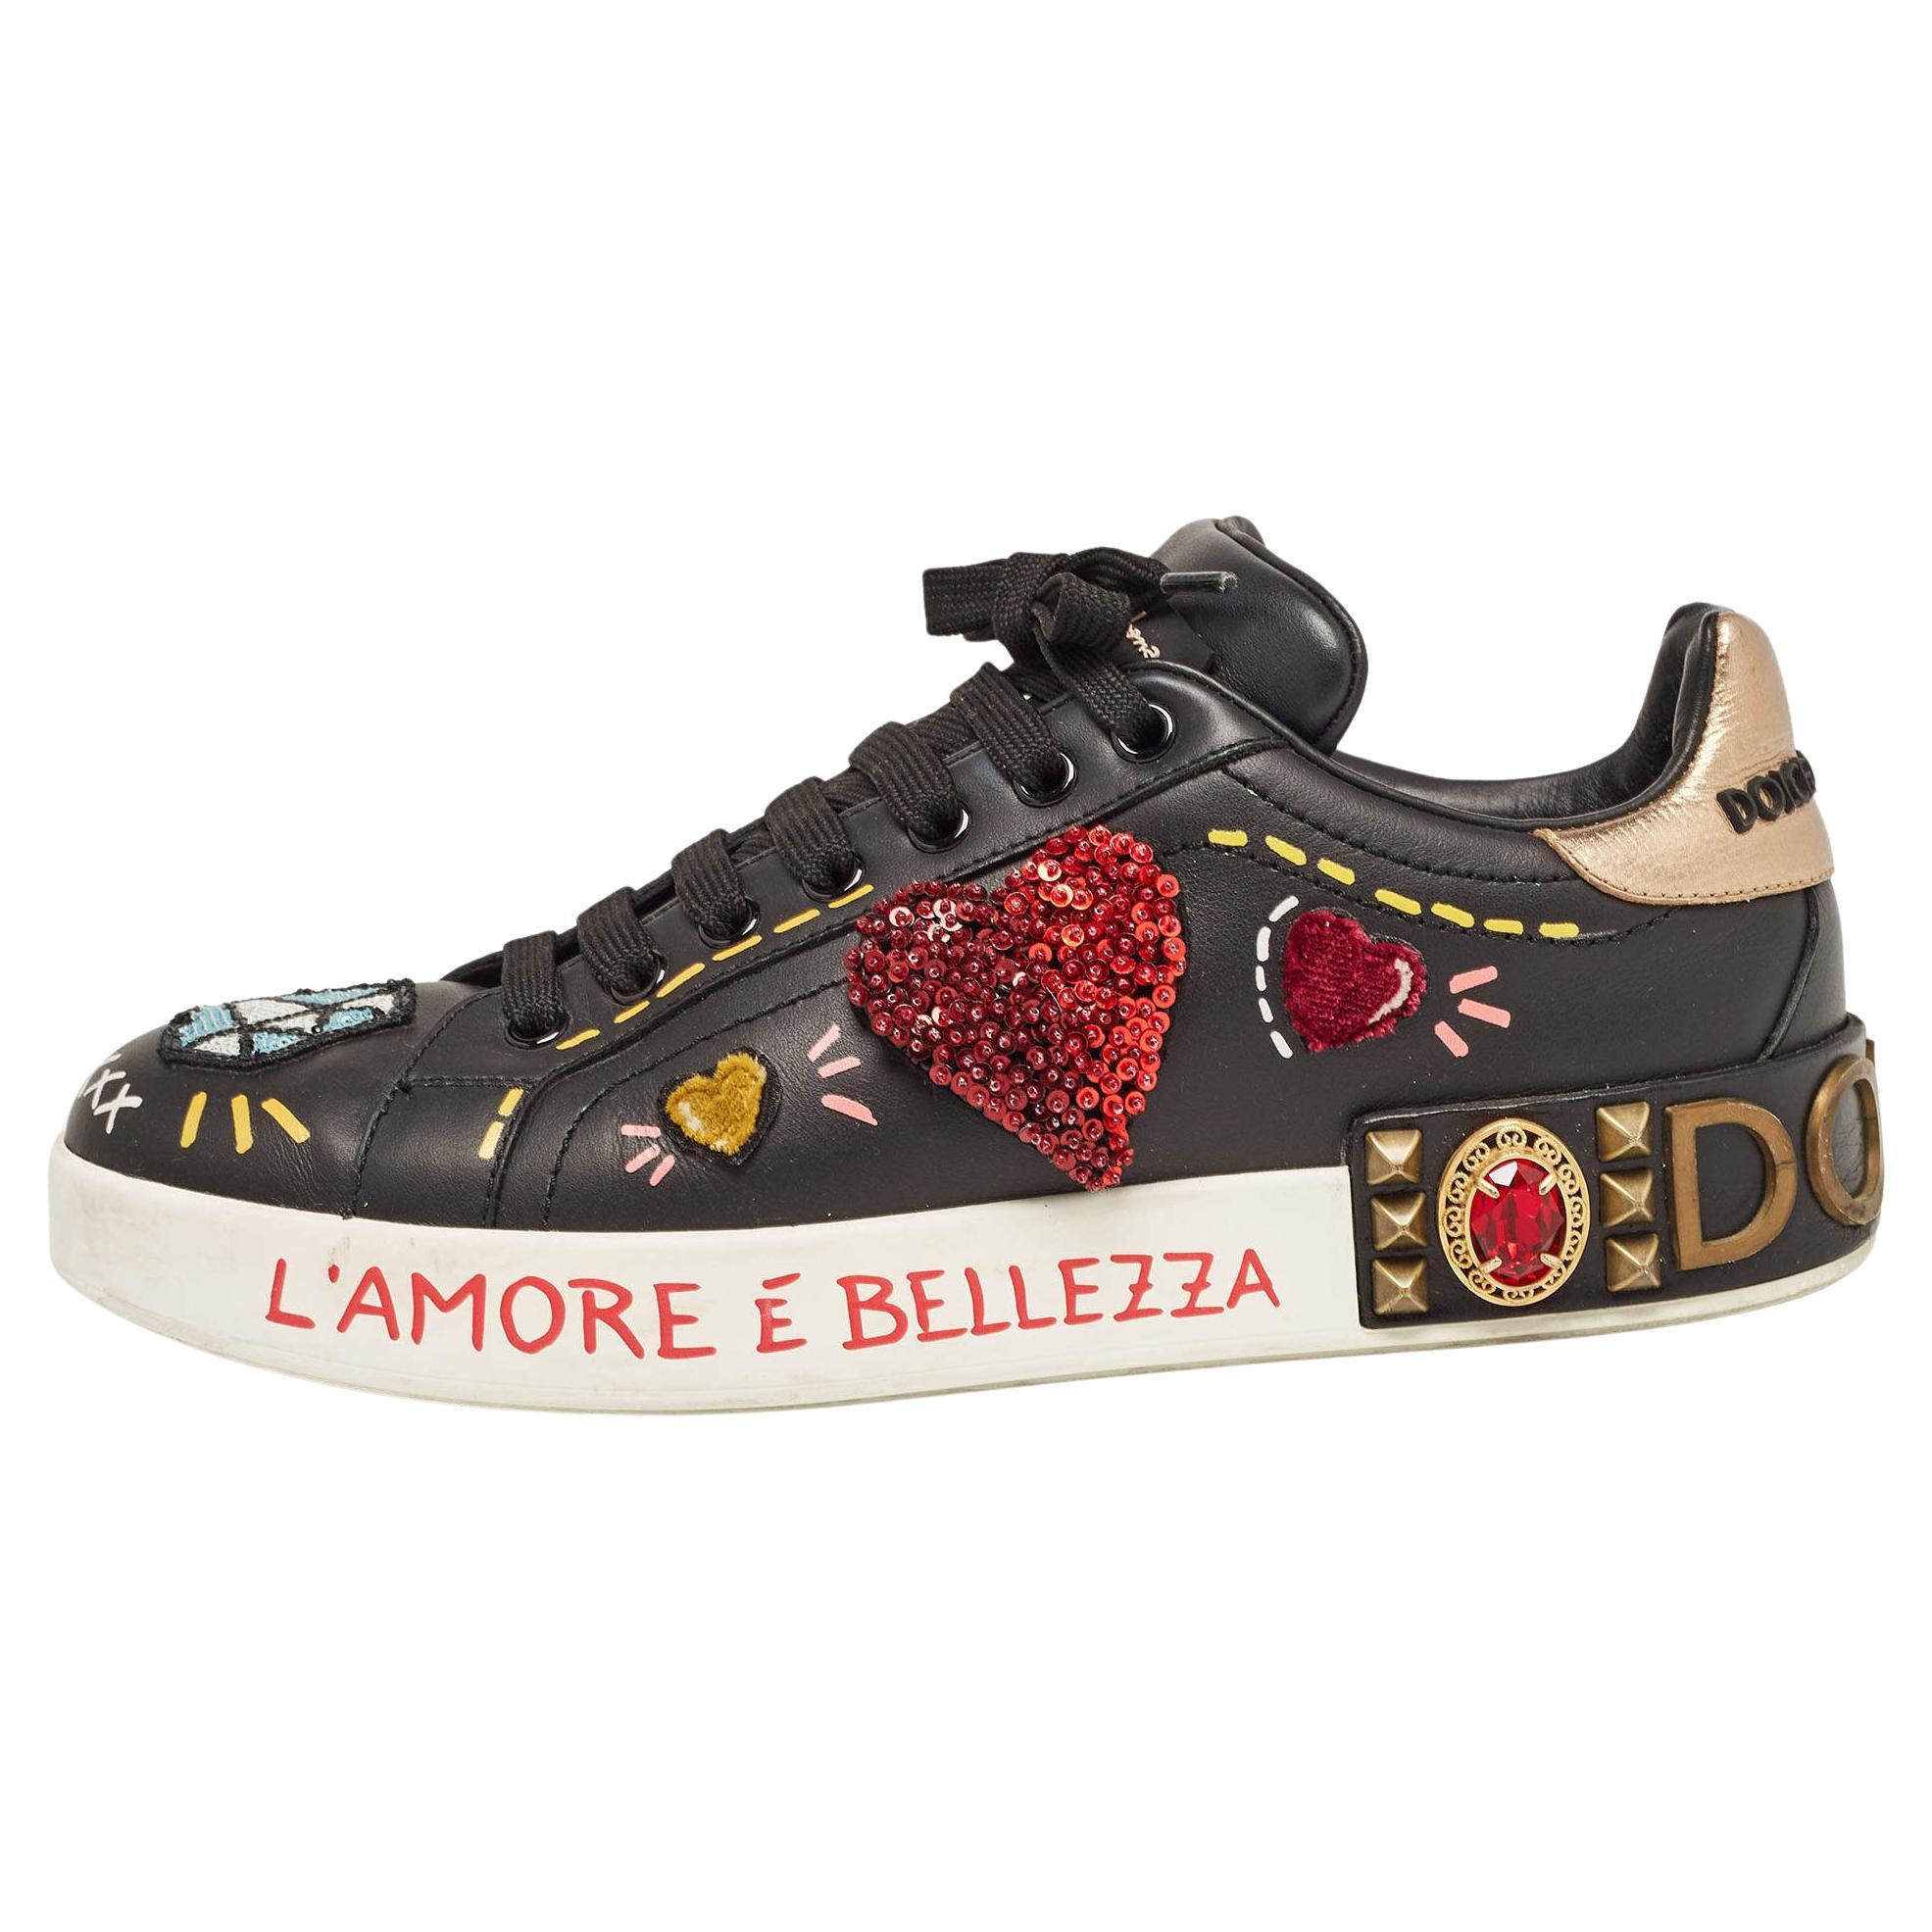 How do I wear Dolce & Gabbana’s Sorrento sneakers?